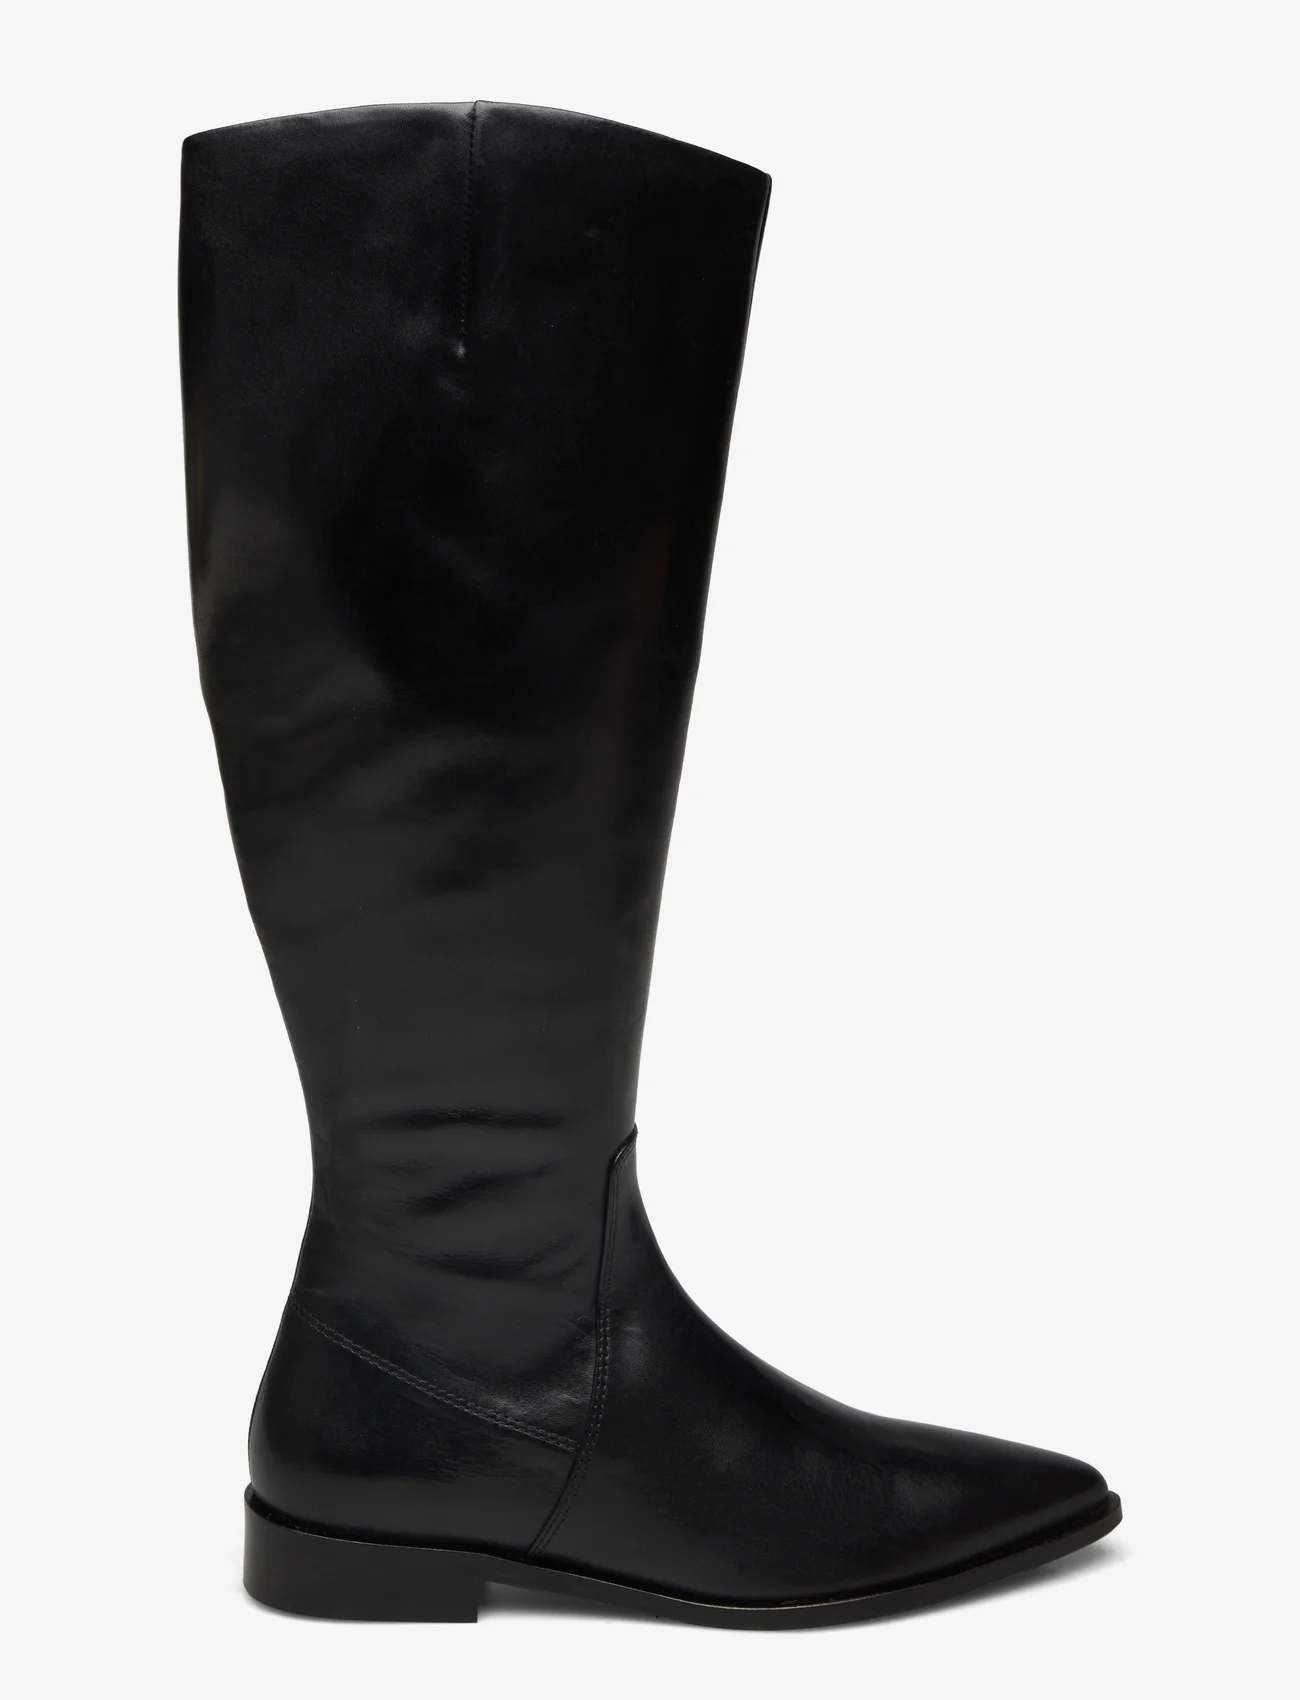 Billi Bi - Long Boots - höga stövlar - black calf - 1